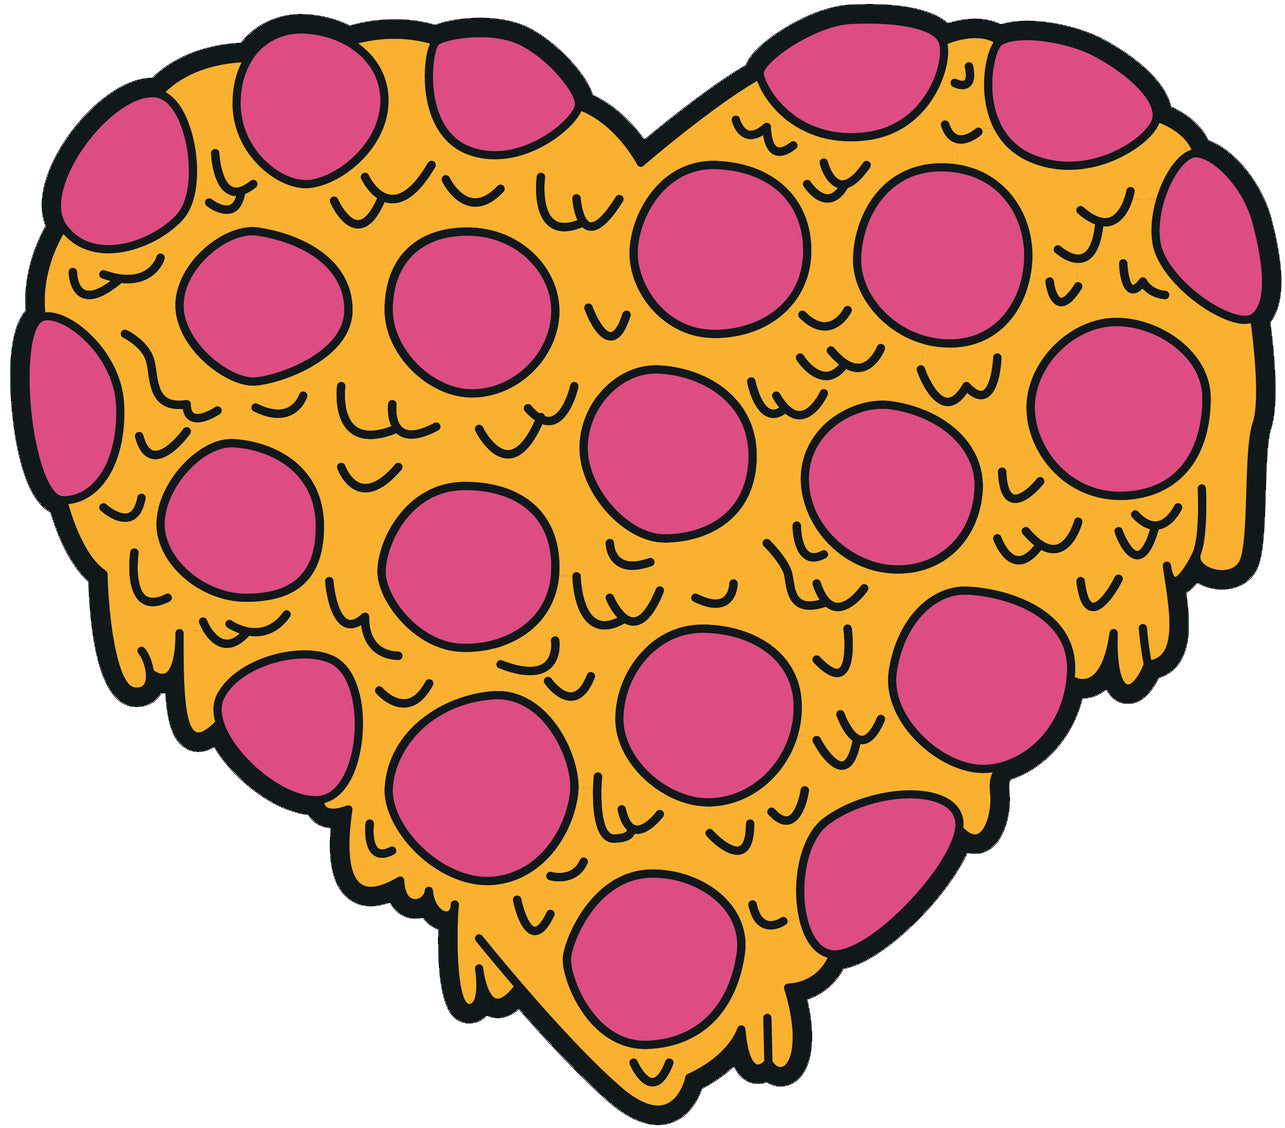 Pepperoni Cheese Pizza Melting Heart Cartoon Vinyl Decal Sticker